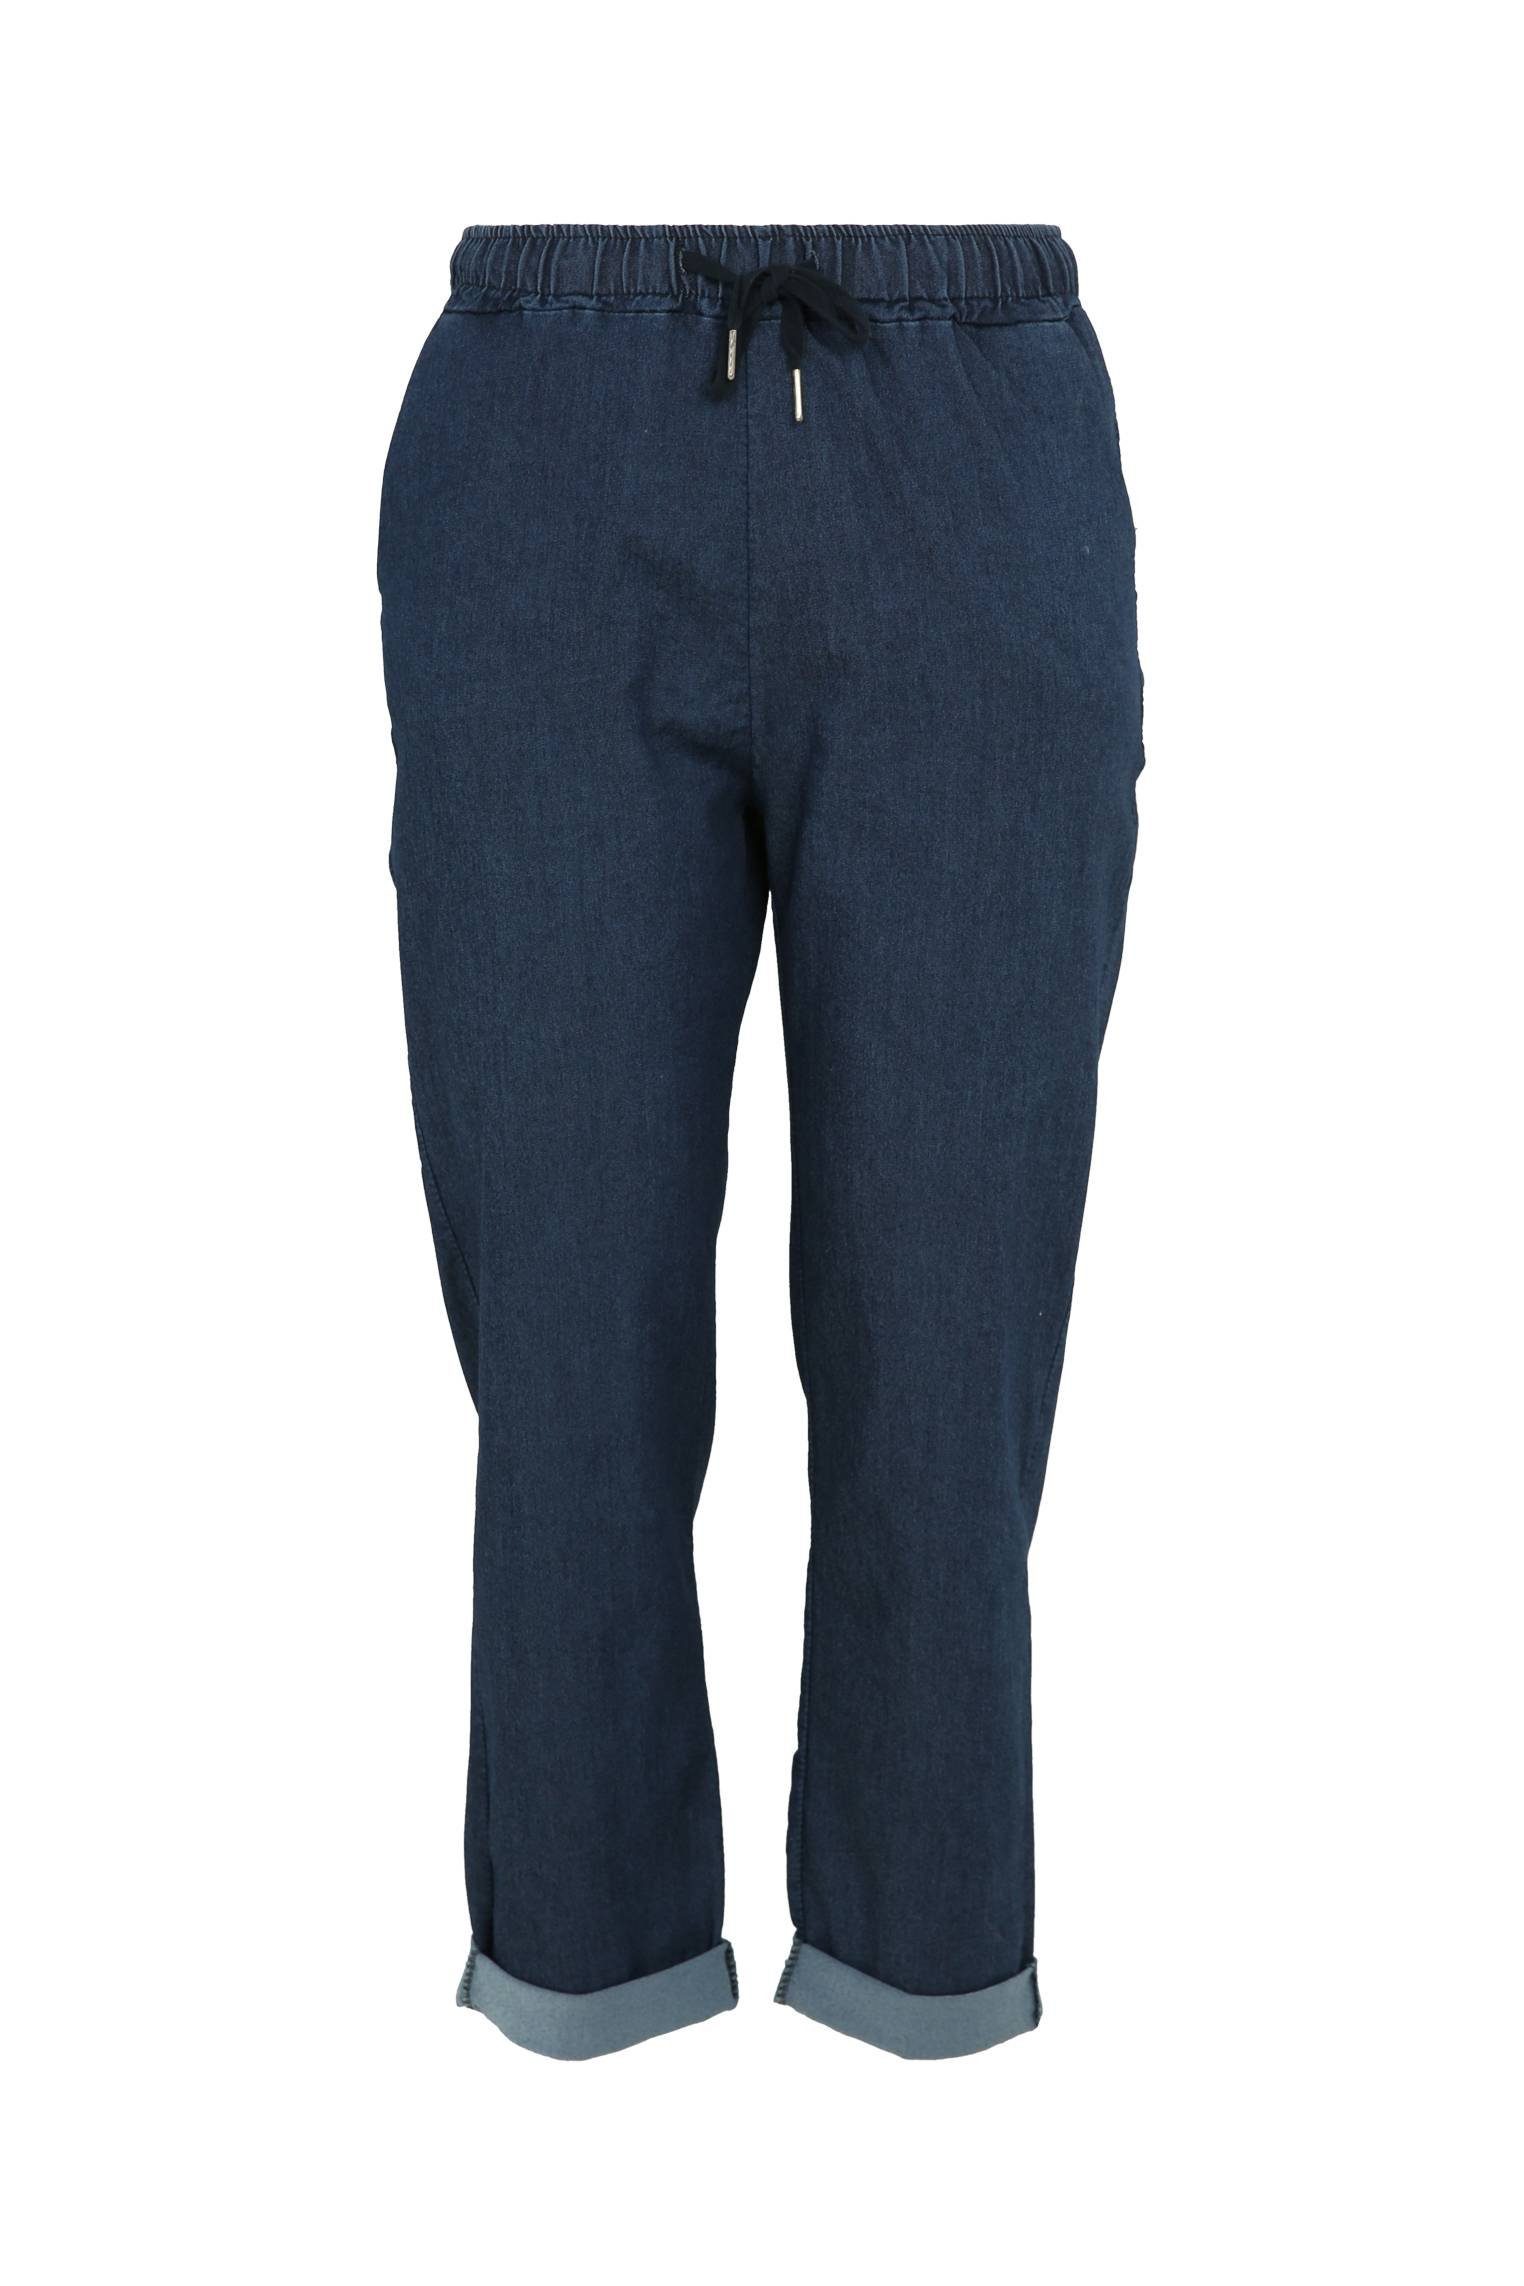 Unifarbene 5-Pocket-Jeans Paprika 7/8-Chinohose